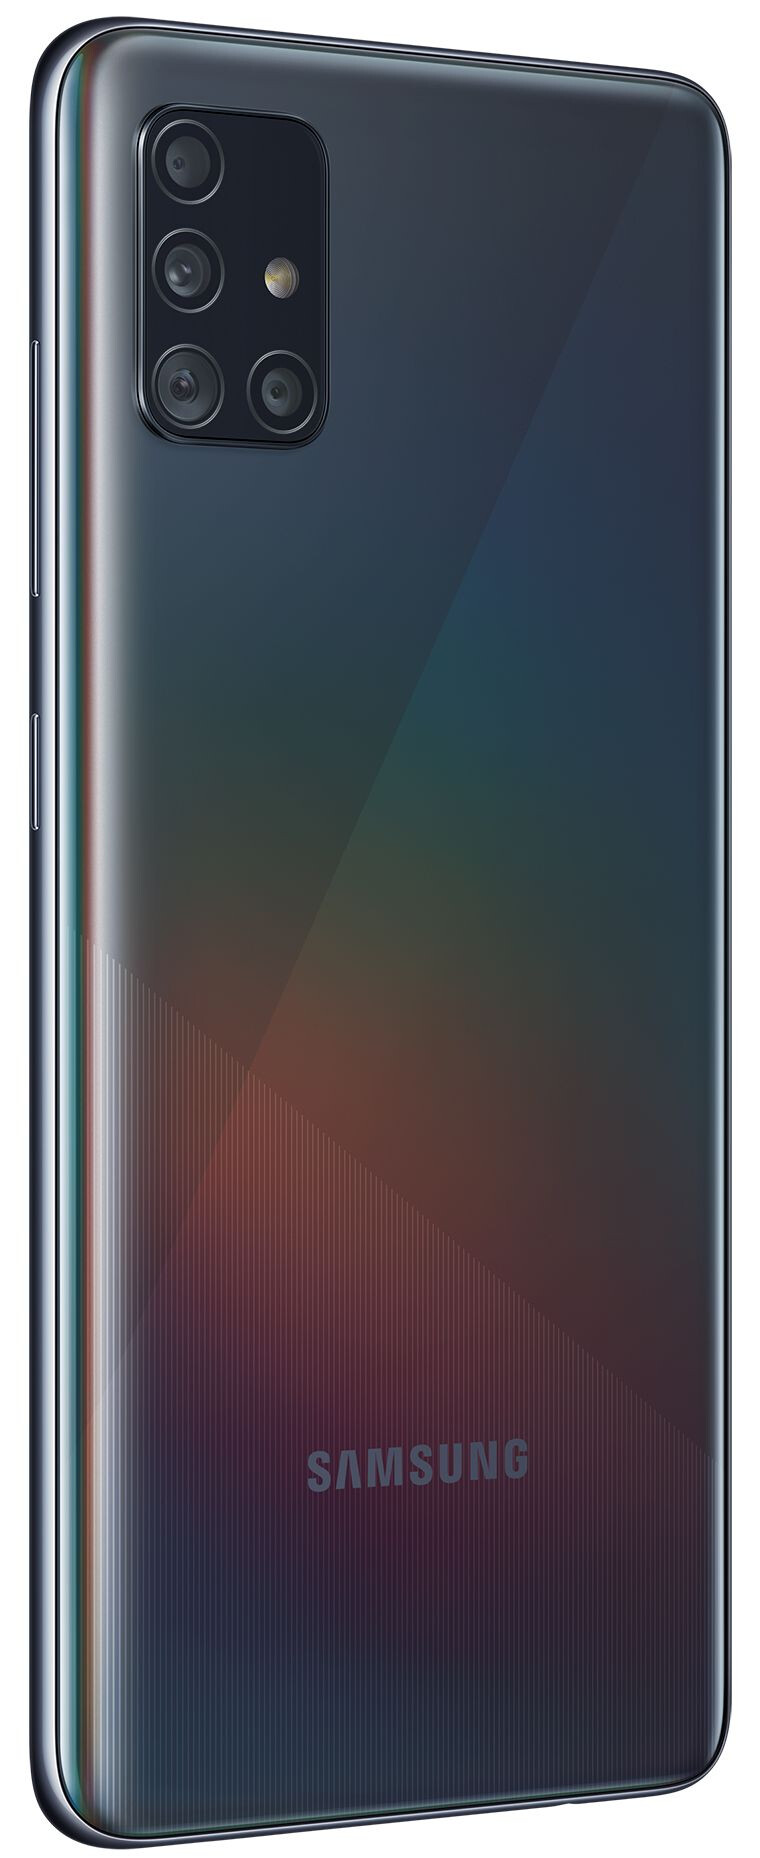 Смартфон Samsung Galaxy A51 4/64GB (ЕАС) Prism Crush Black (Черный)